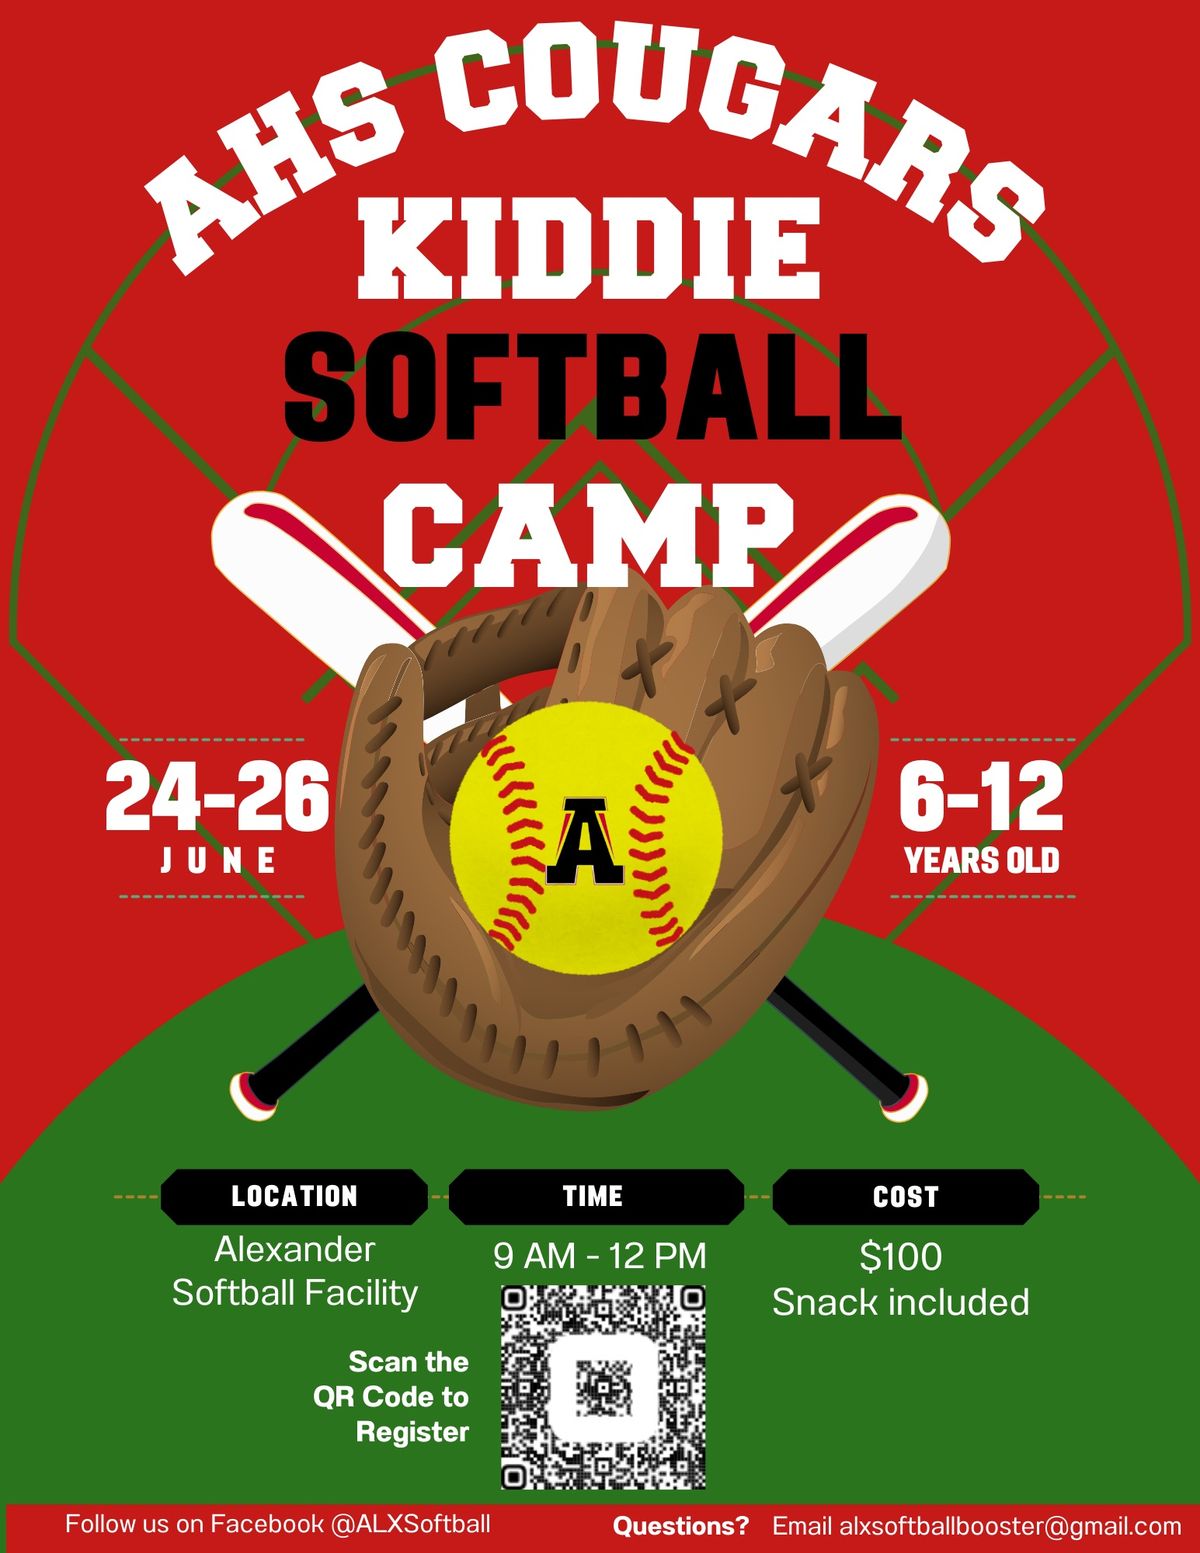 Softball Kiddie Camp -Alexander High School 